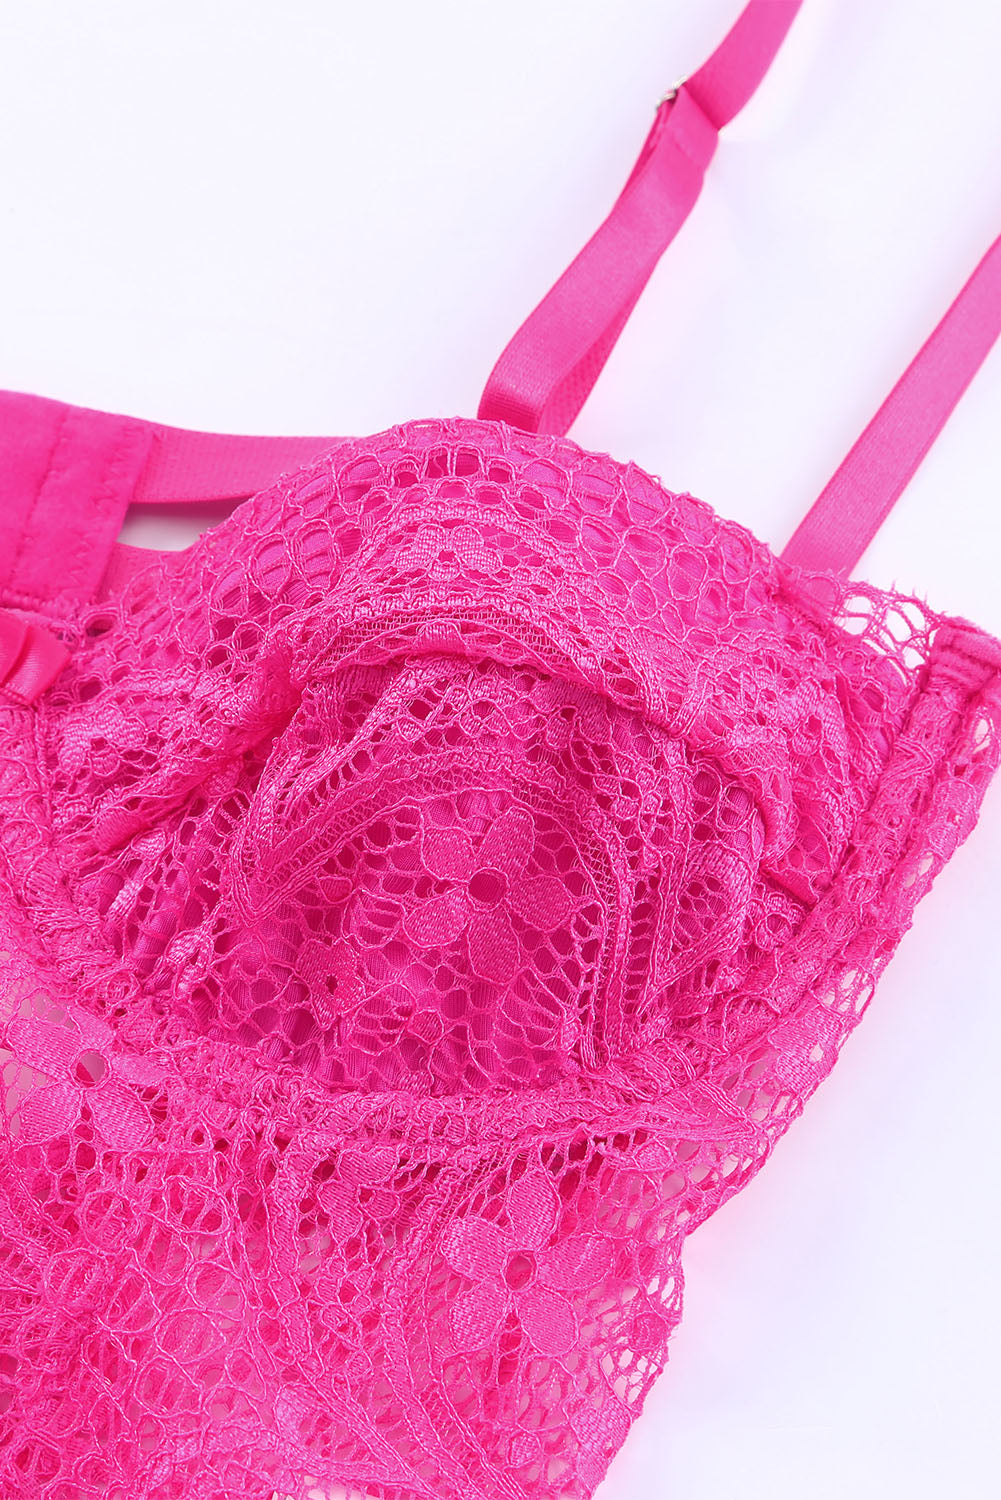 Rose Adjustable Straps Floral Lace Crochet Teddy Lingerie Teddy Lingerie JT's Designer Fashion